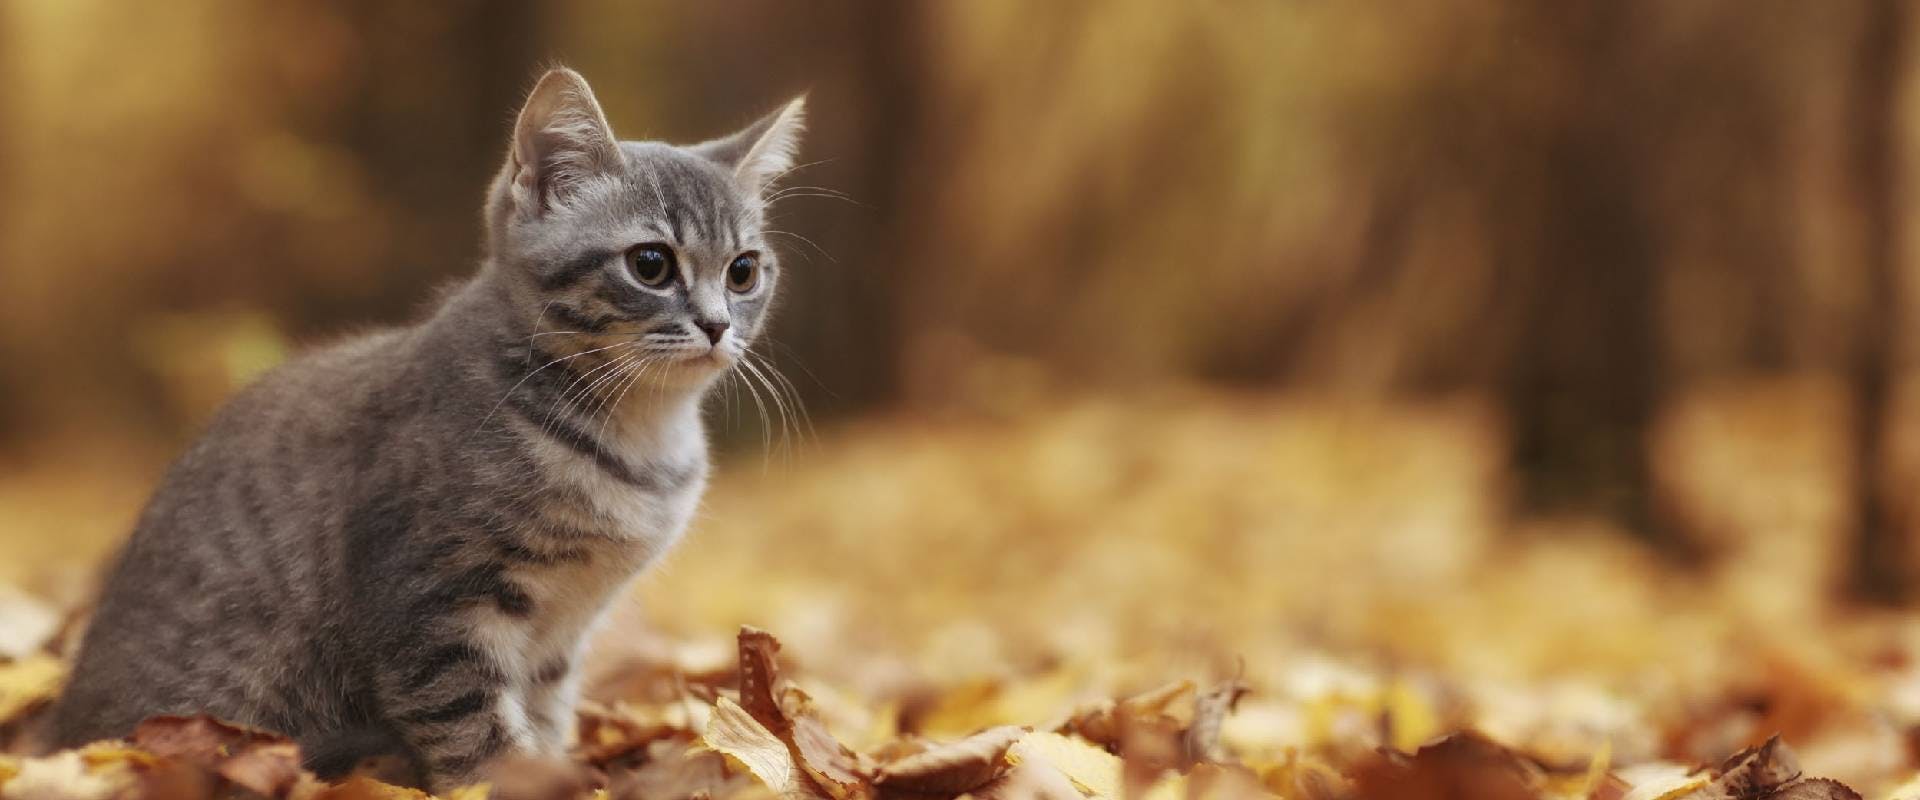 Kitten sitting amongst autumn leaves